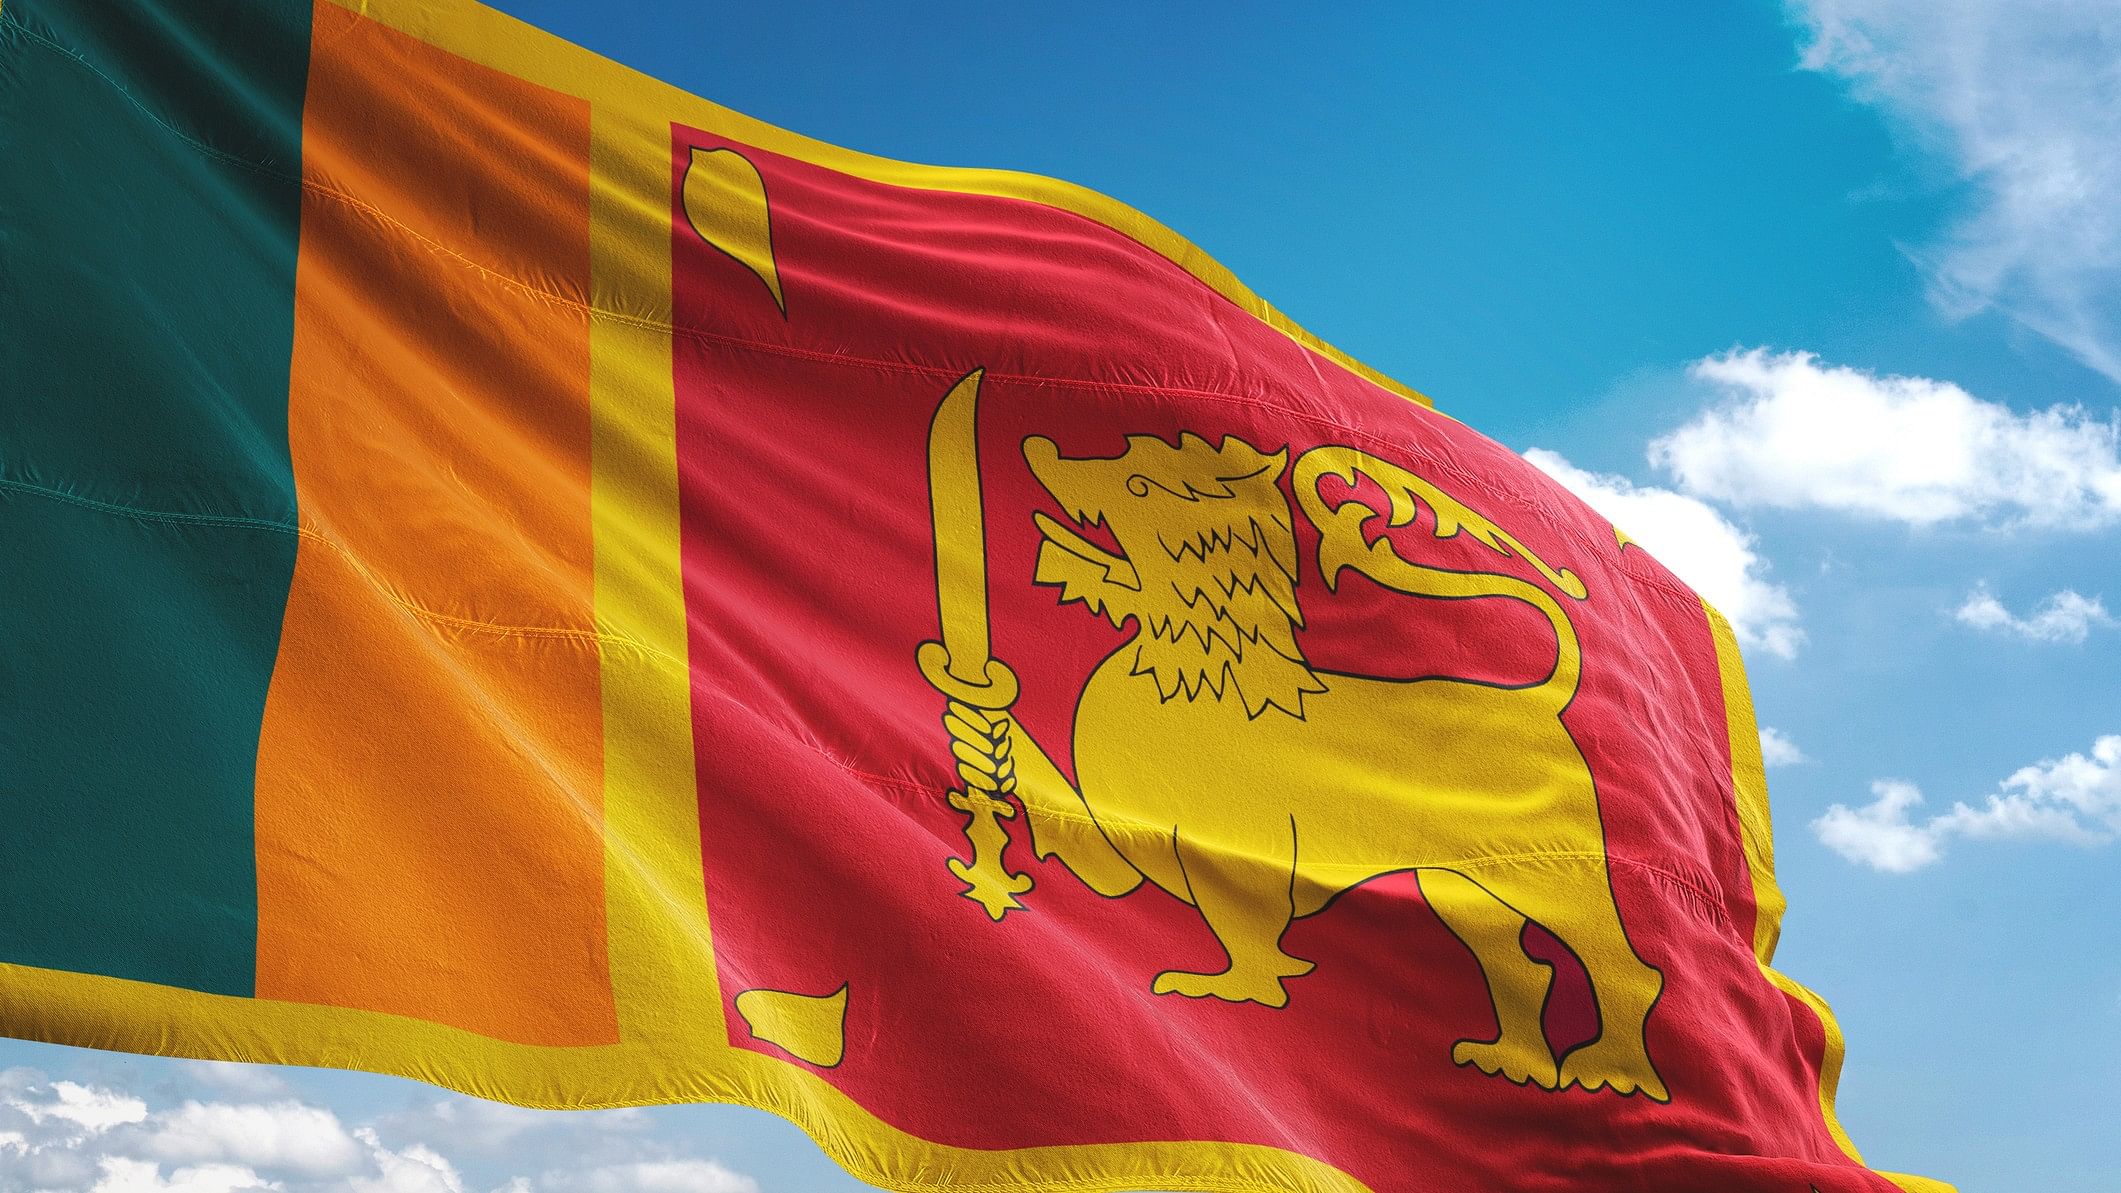 <div class="paragraphs"><p>Representative image showing the Sri Lanka flag.</p></div>